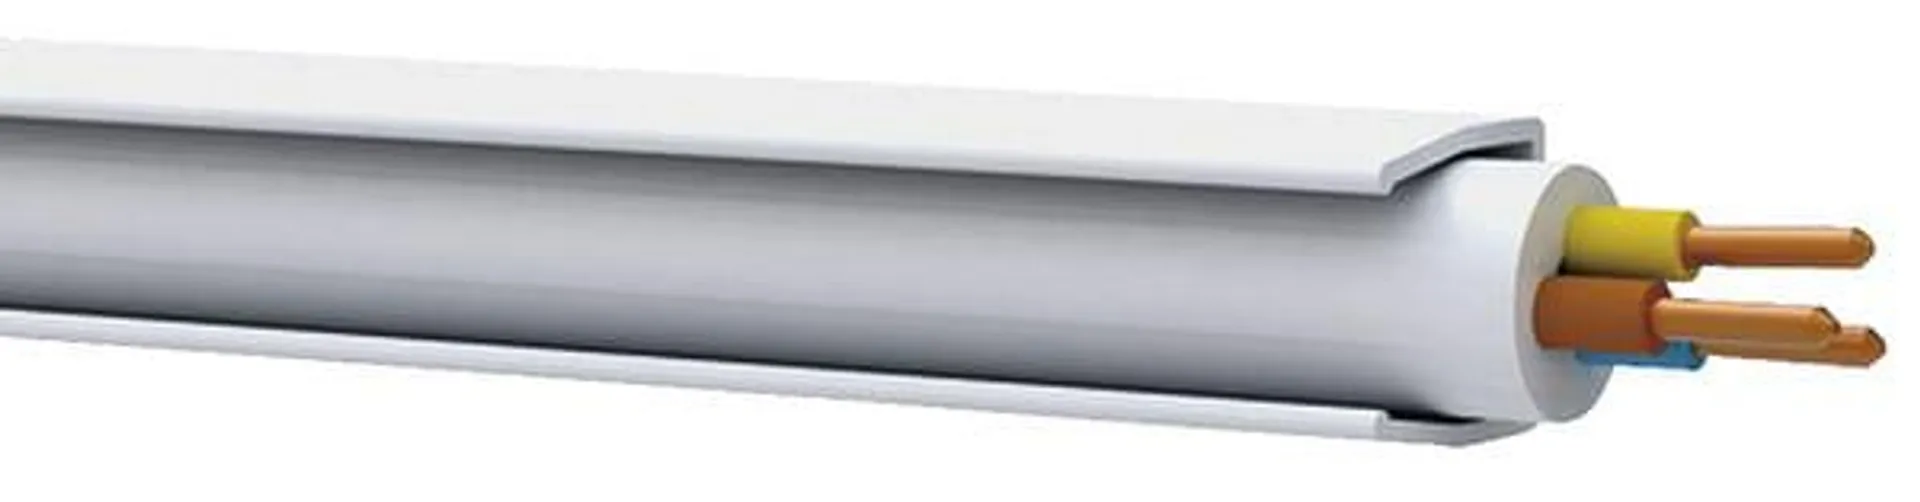 Moulure adhésive 8x9 - Blanc - 8 x 9 mm 2 m - GGK